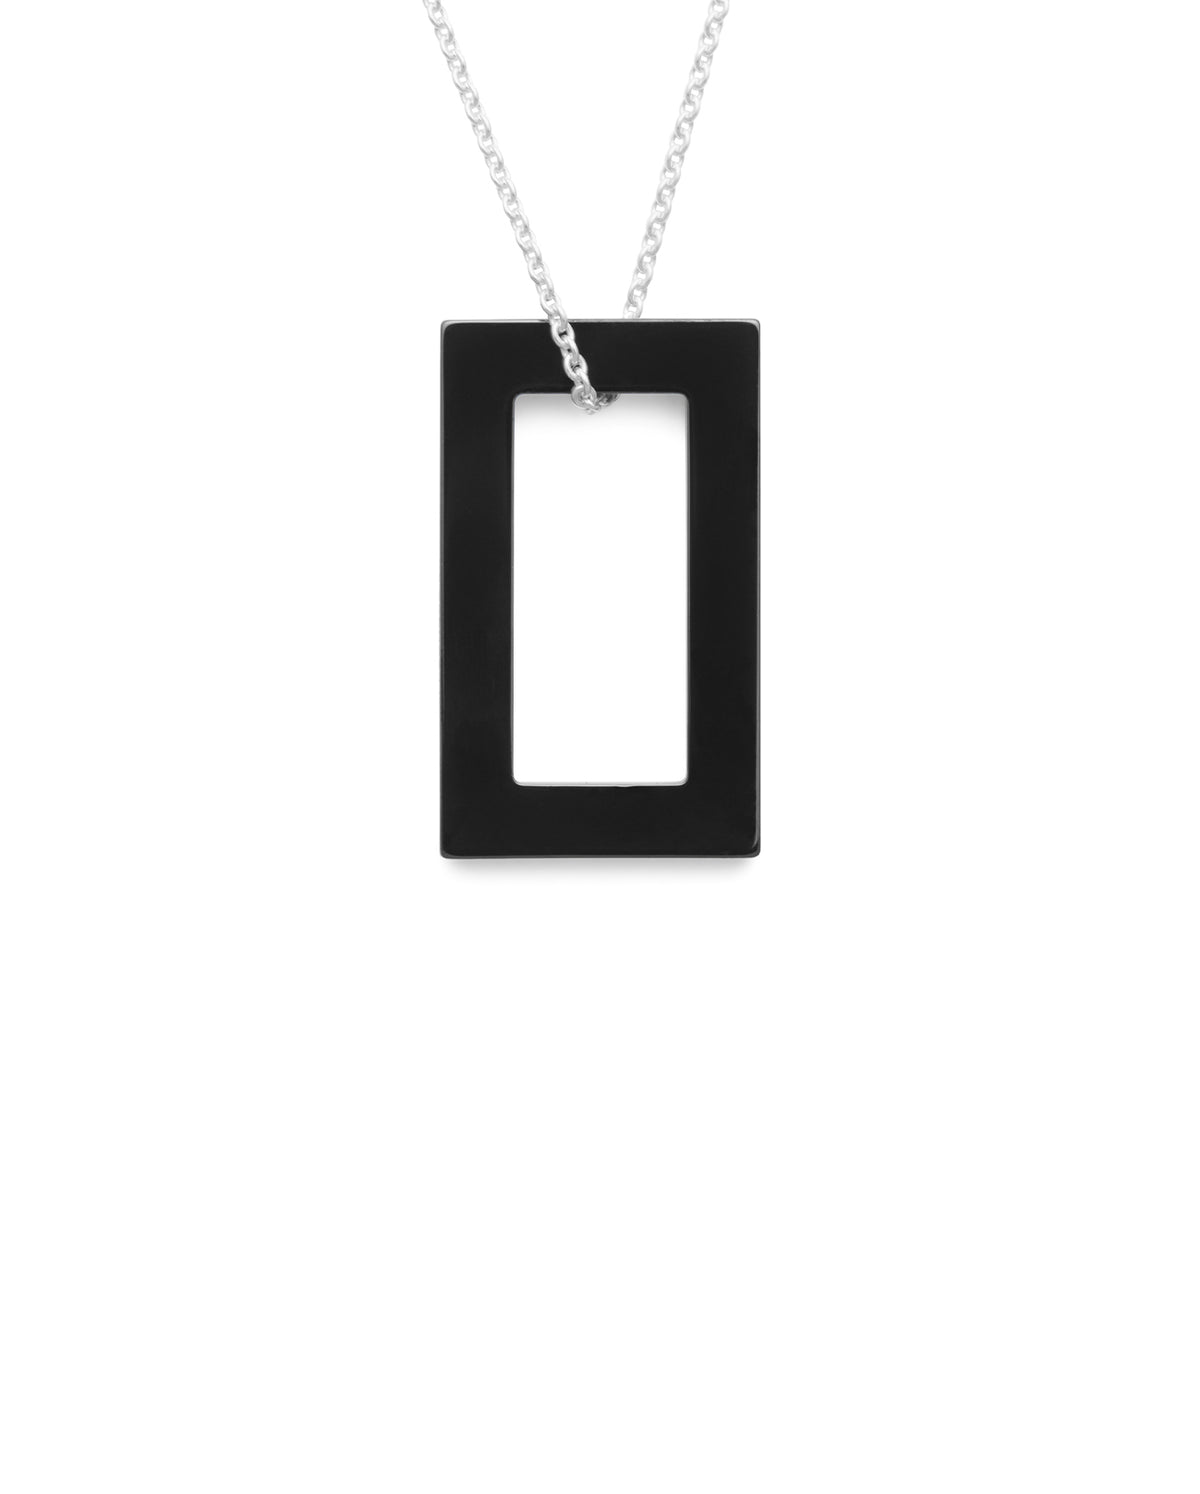 2.1G Ceramic Necklace - Black